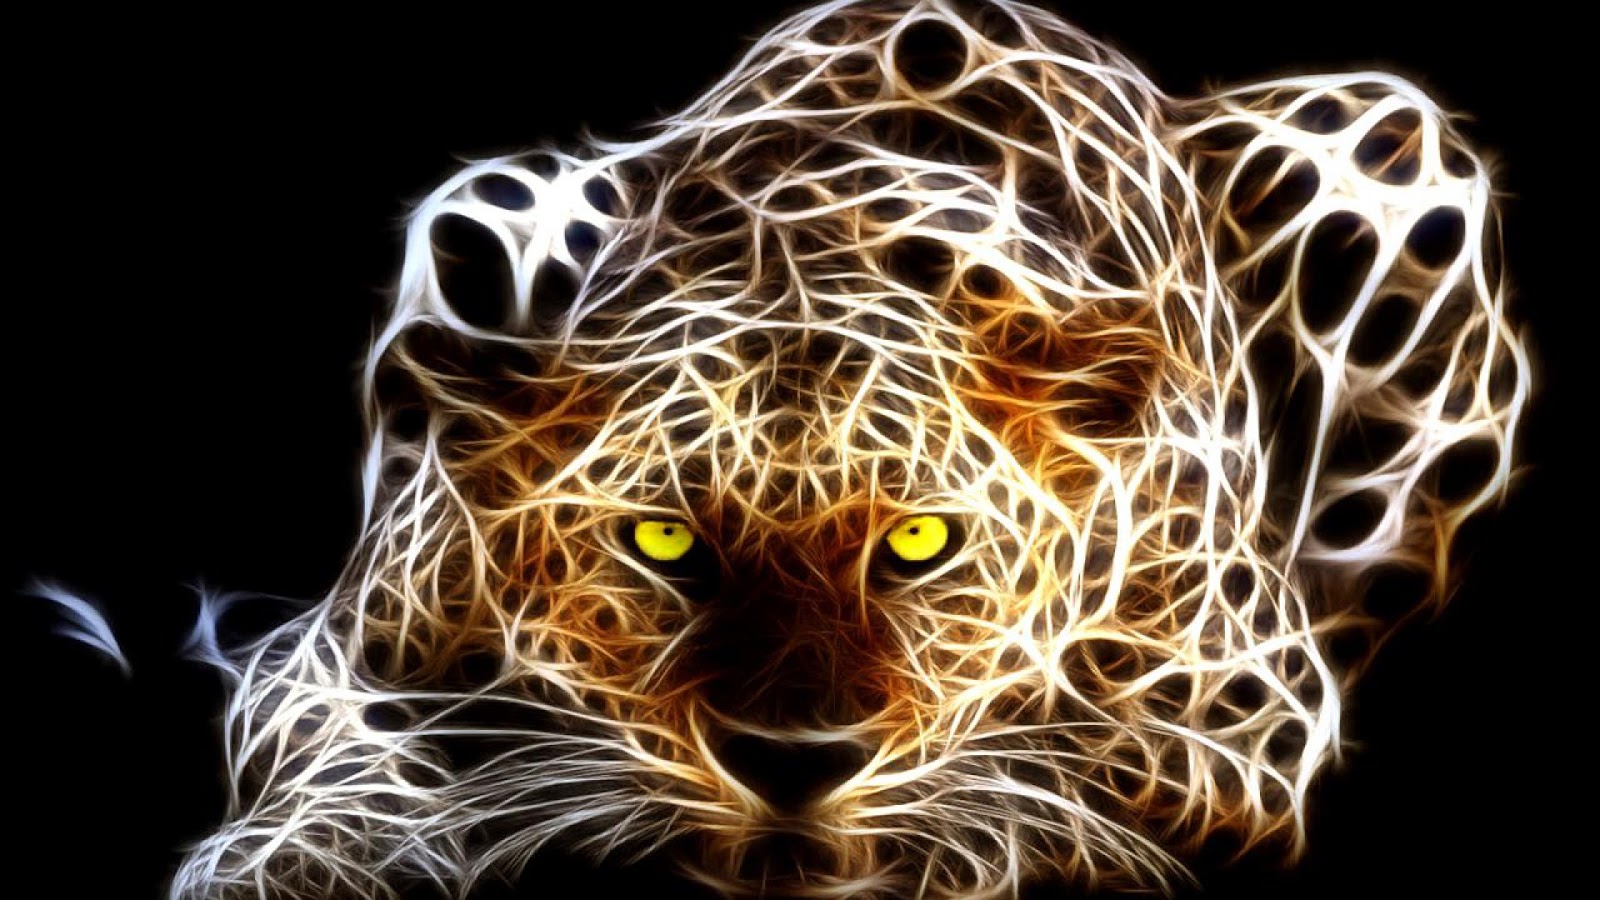 neon tiger wallpaper,felidae,jaguar,wildlife,whiskers,leopard